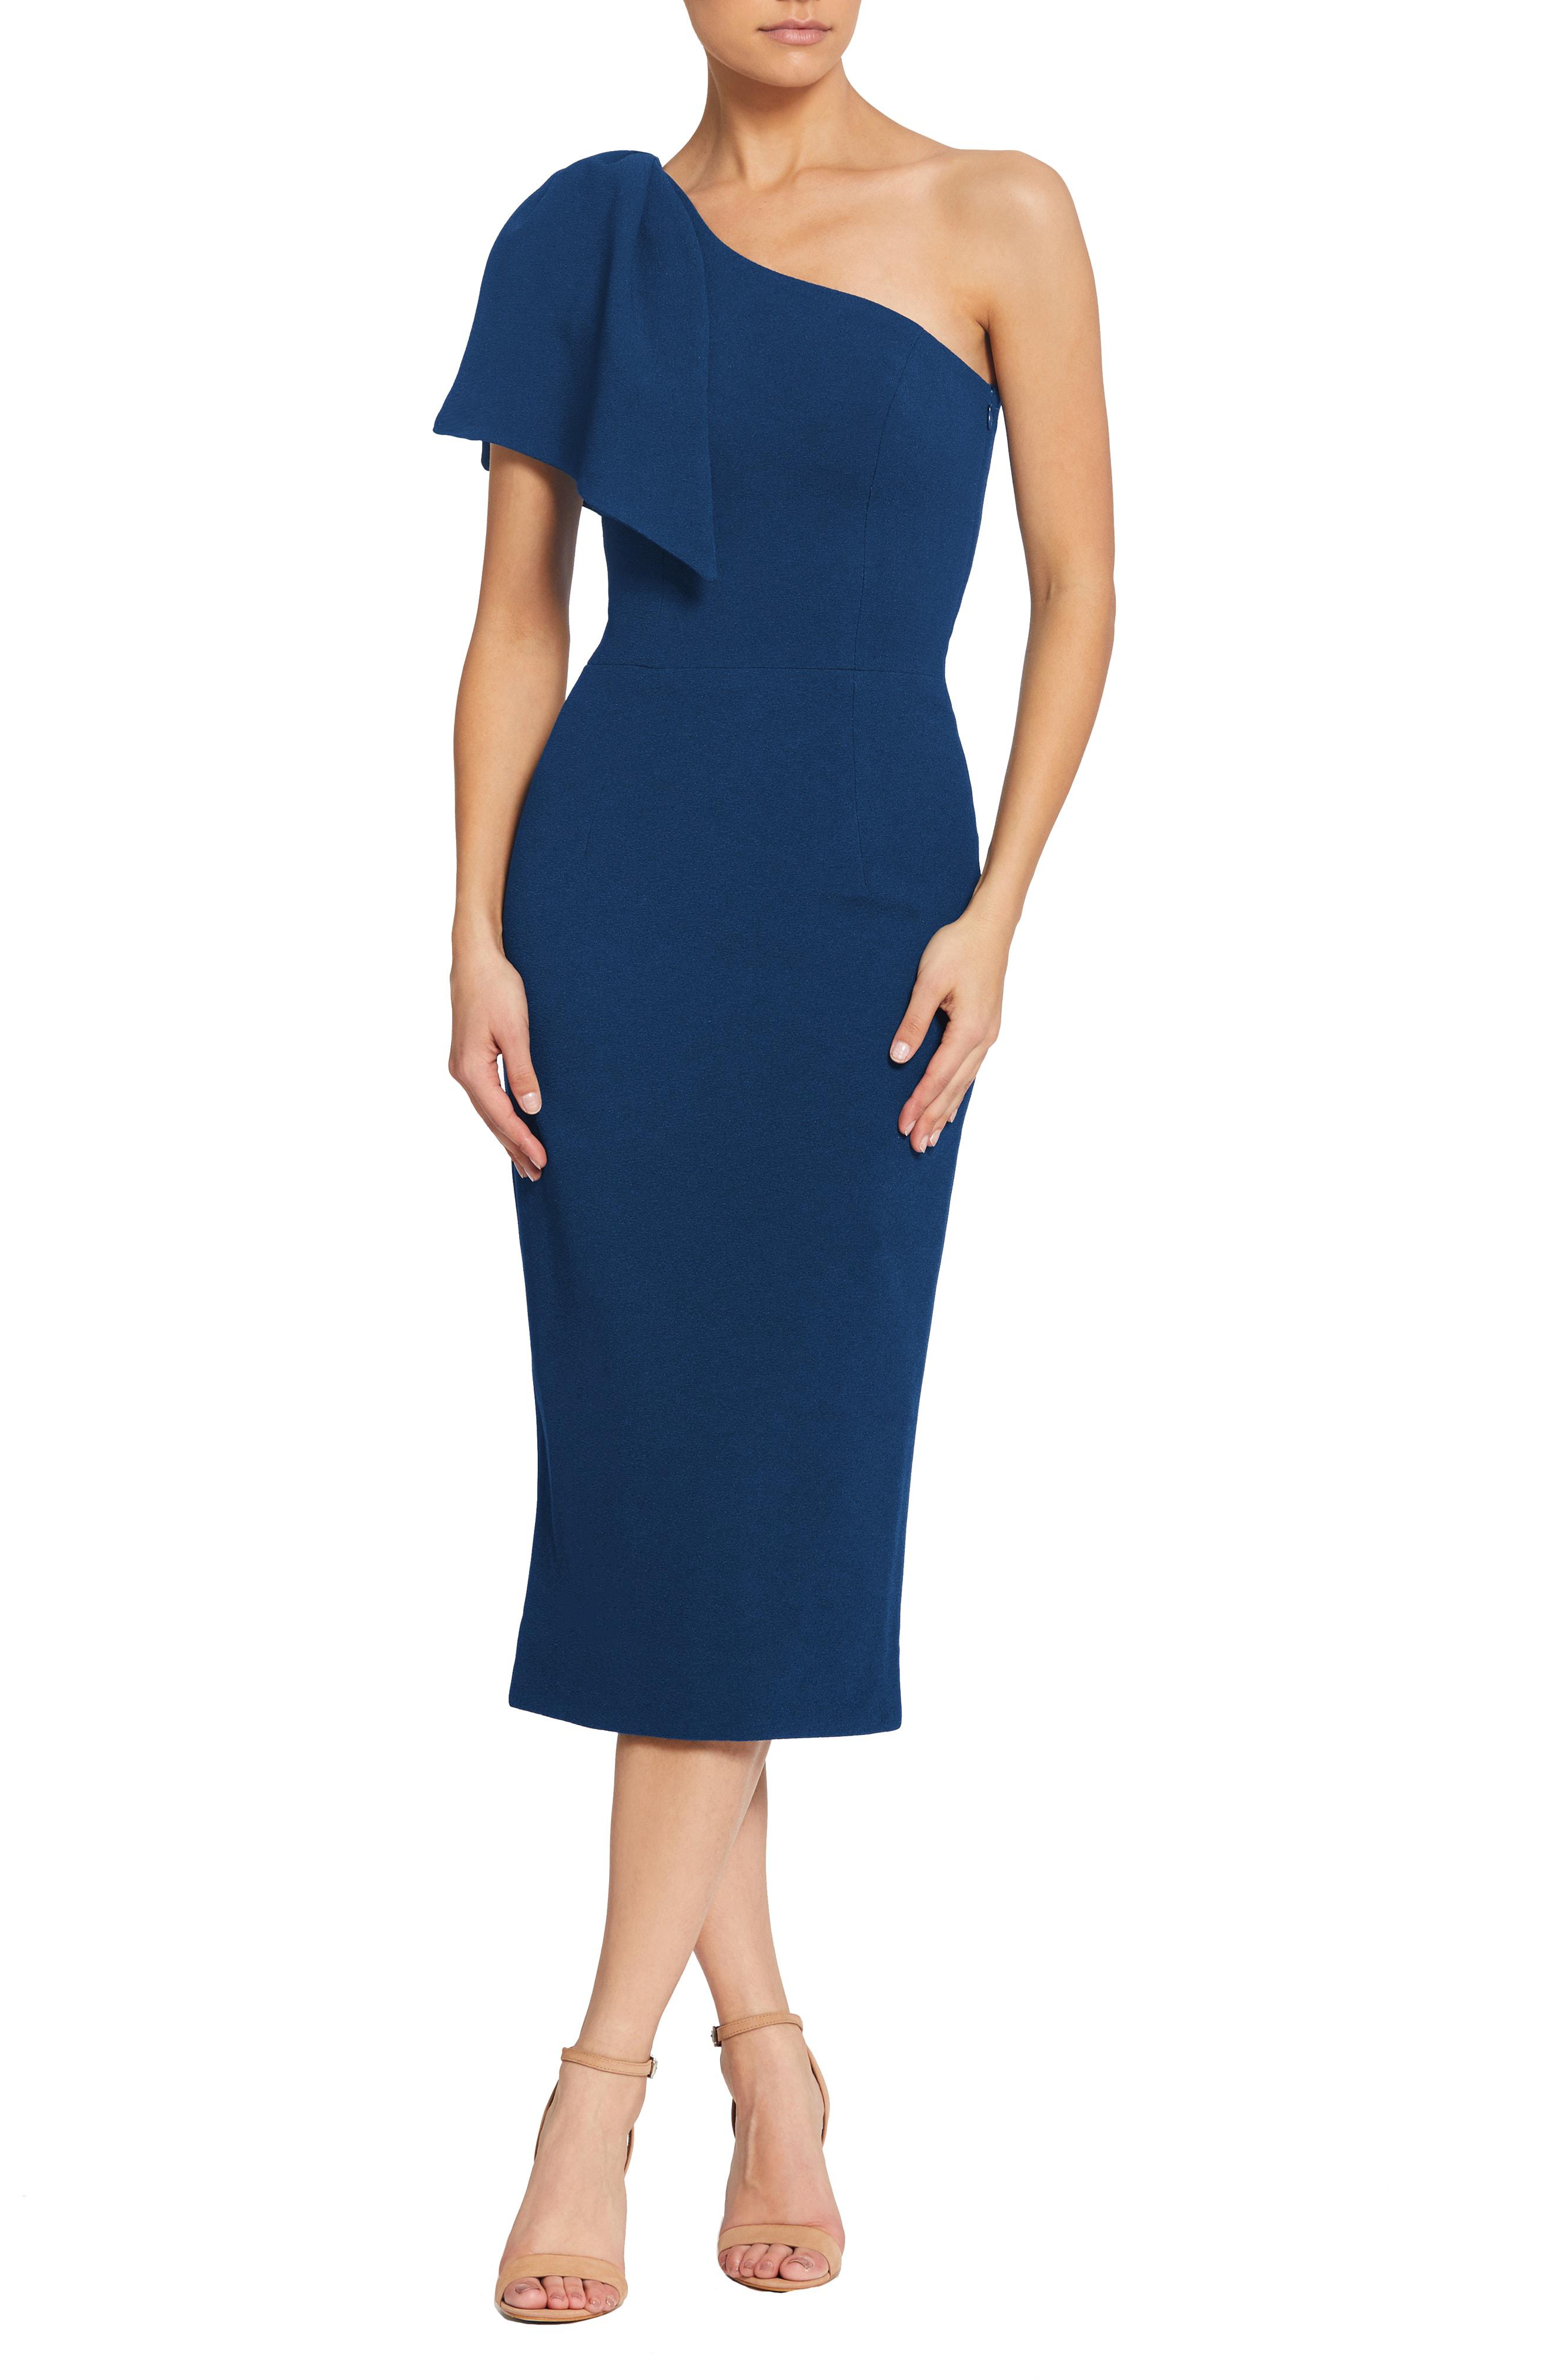 Lyst - Dress the Population Tiffany One-shoulder Midi Dress in Blue